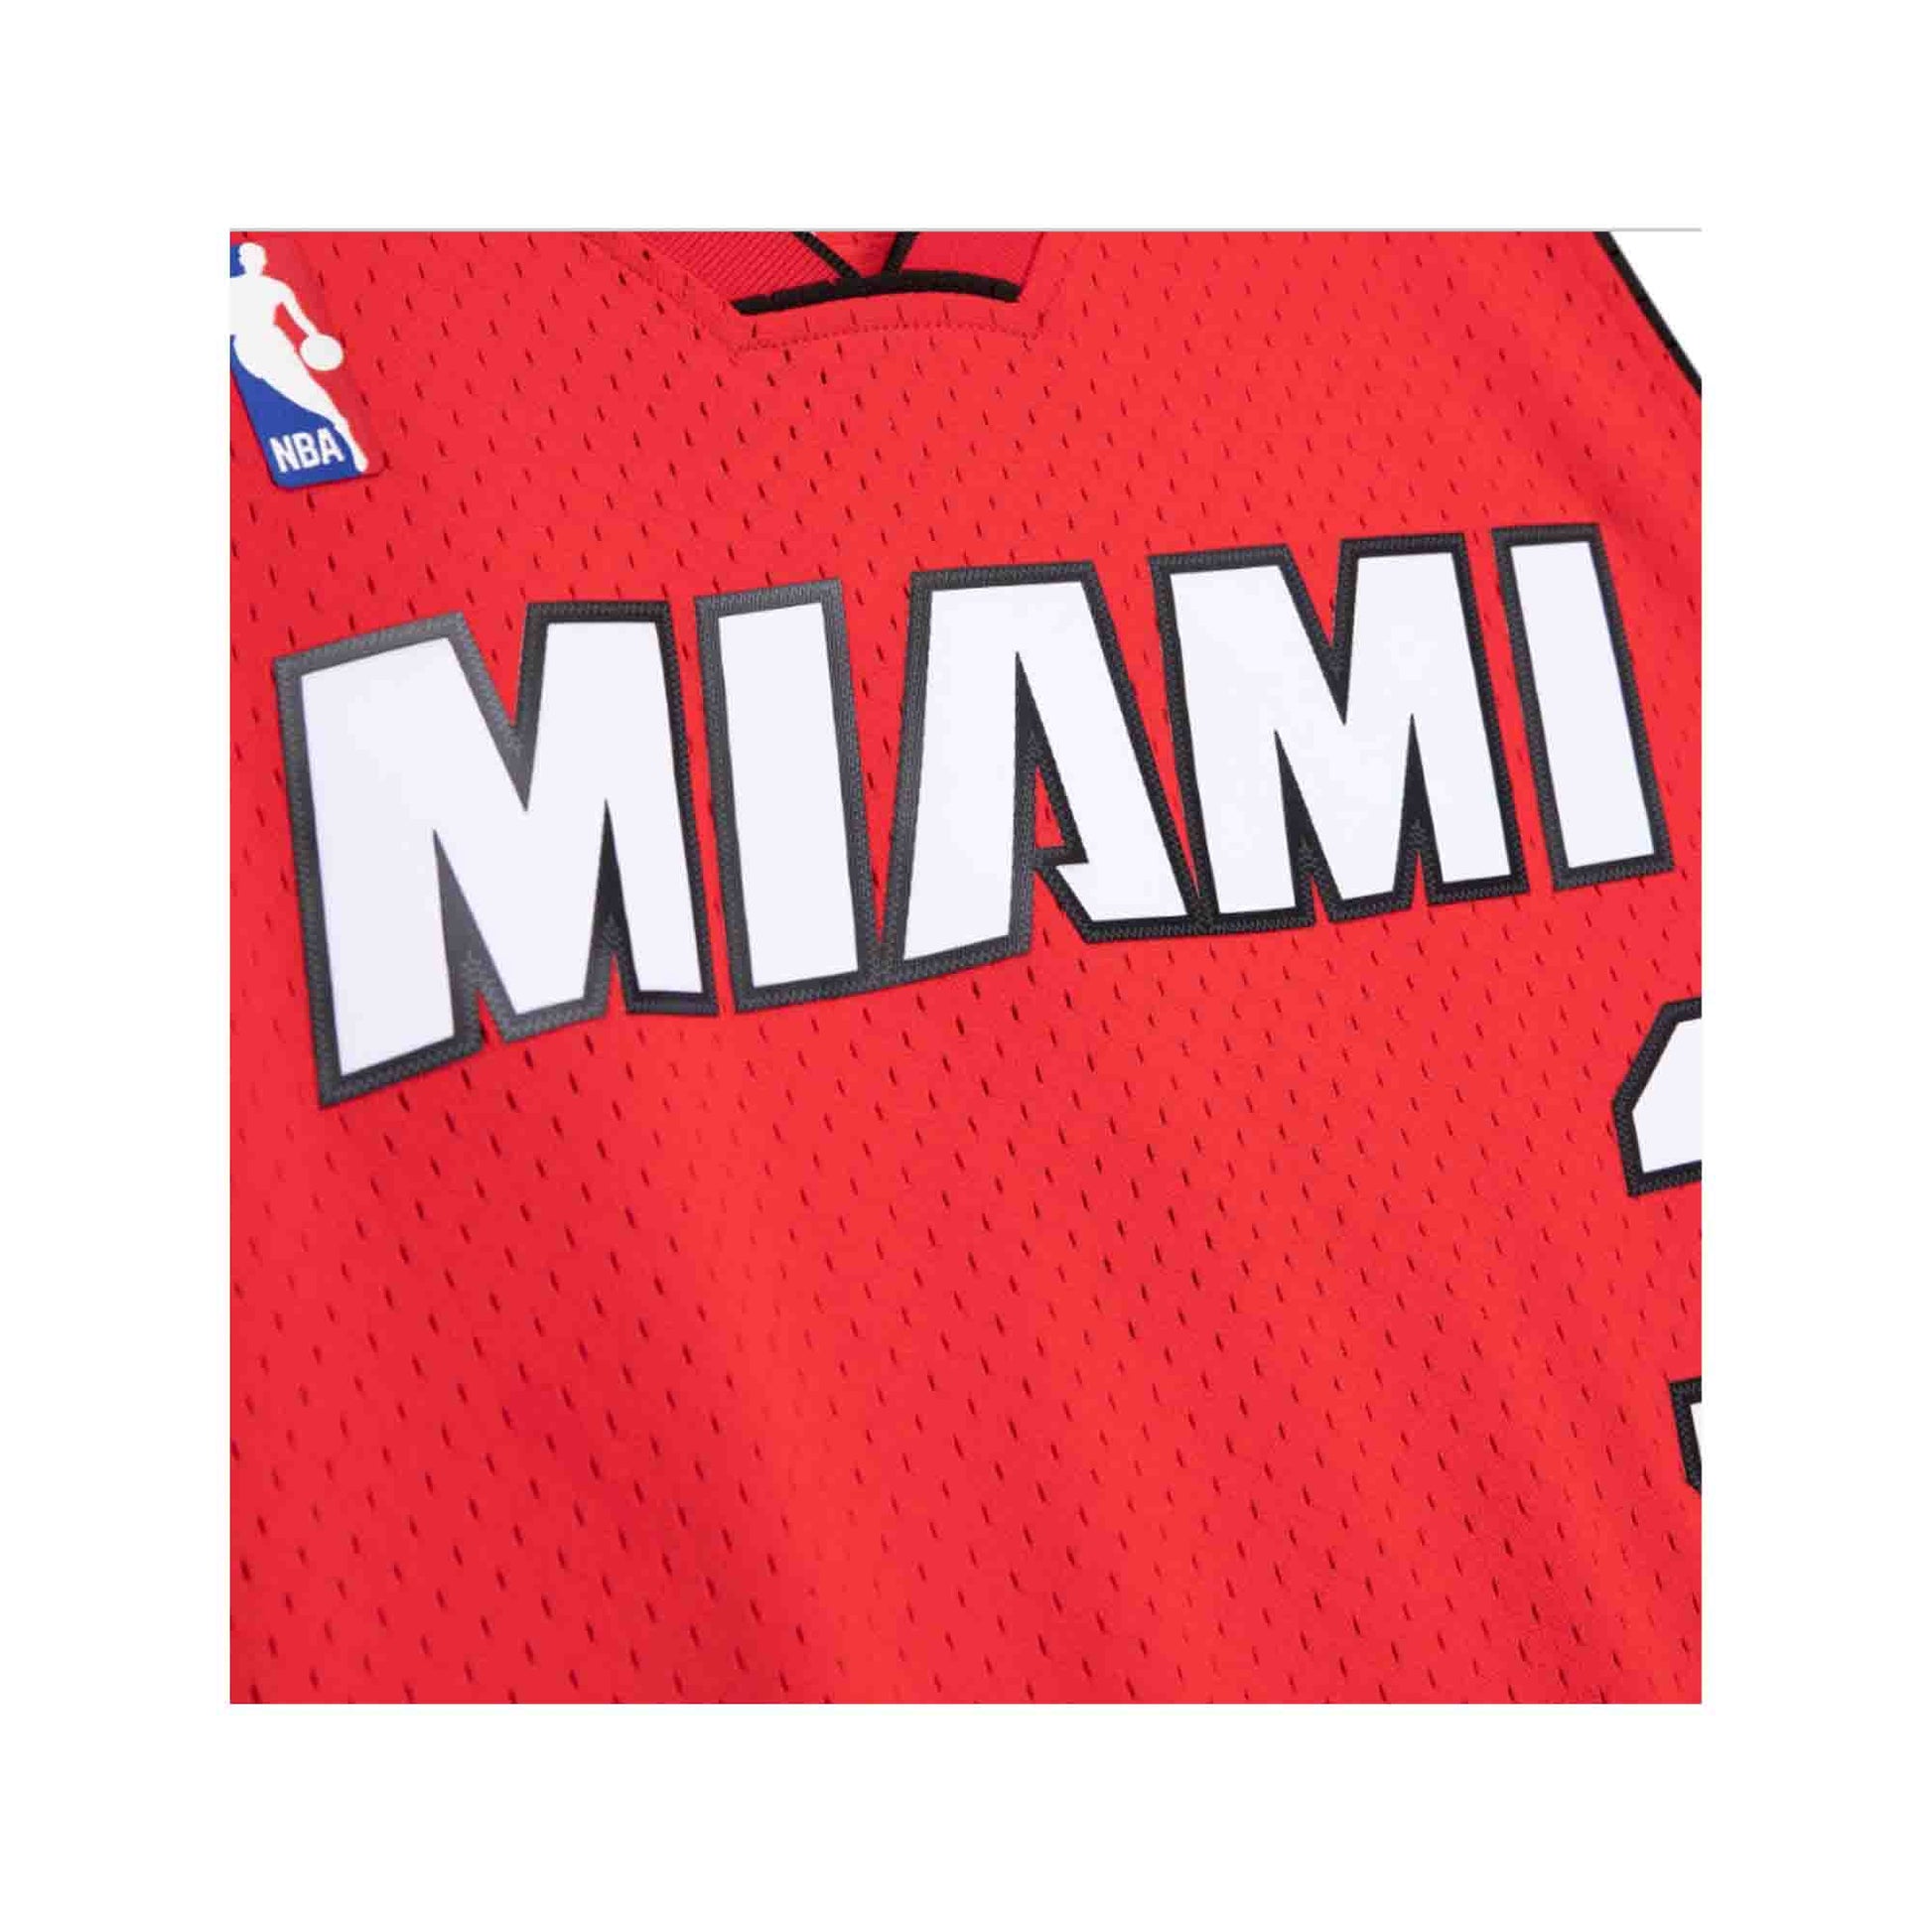 Mitchell & Ness Mens Miami Heat NBA 2005-06 Shaquille O'Neal Swingman Jersey, Black / XL